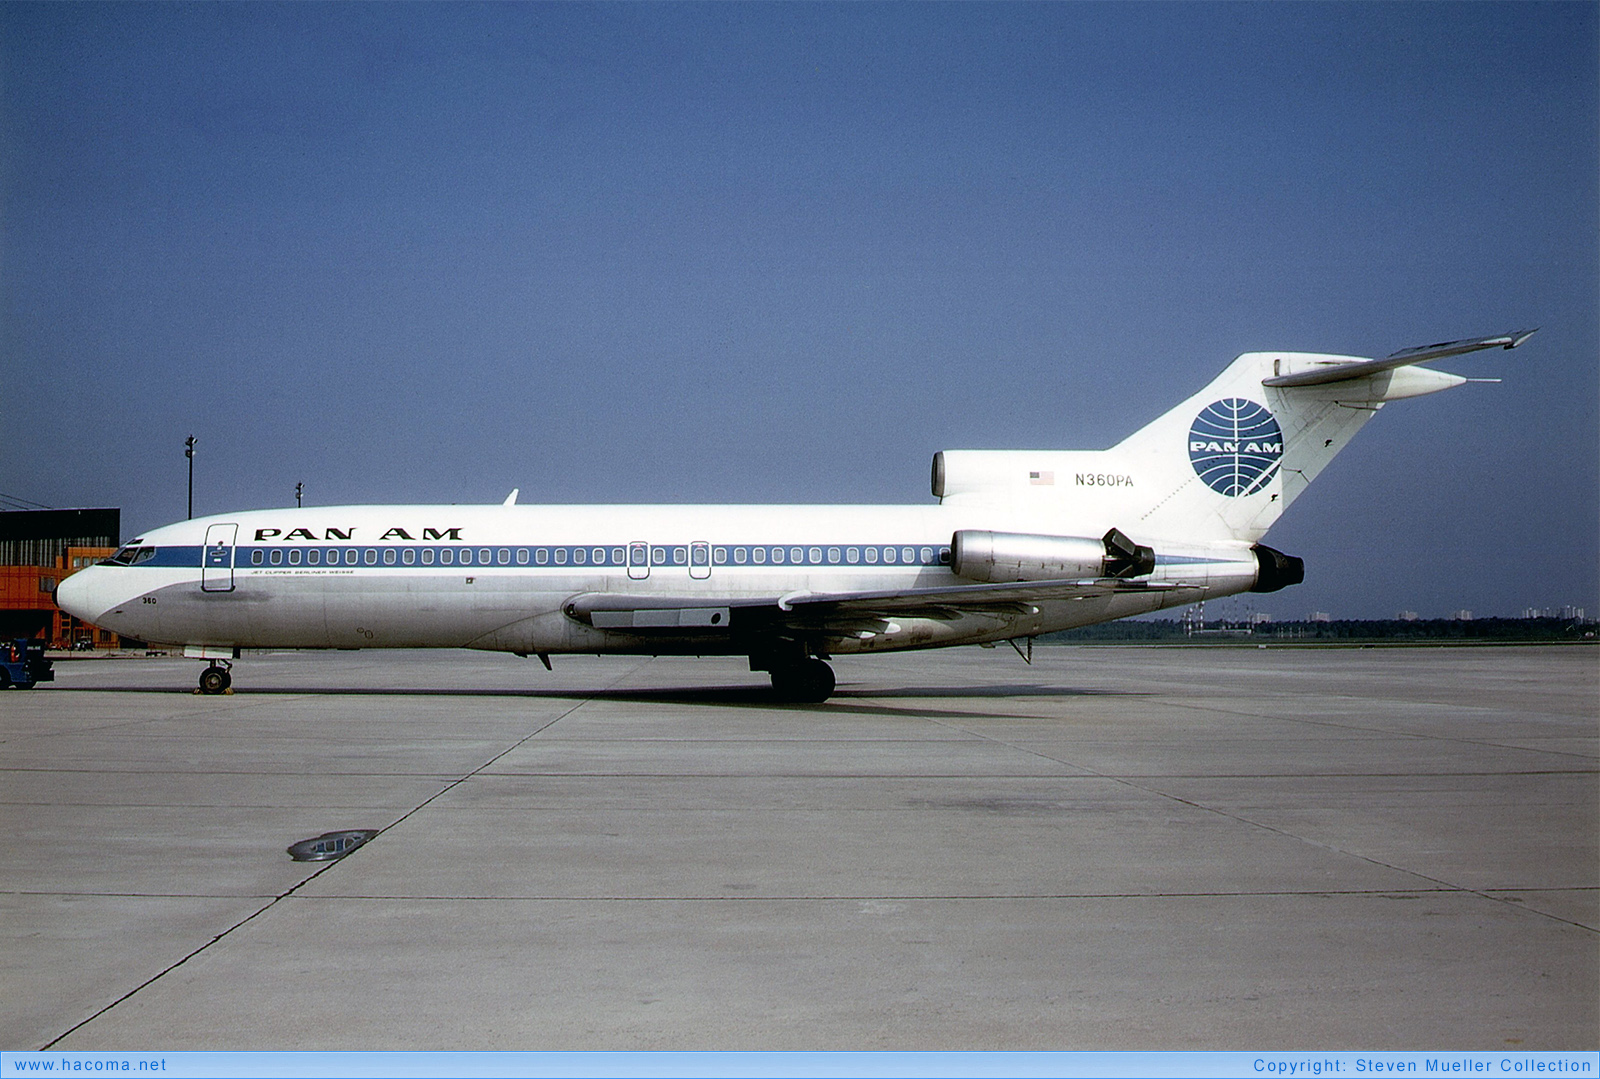 Photo of N360PA - Pan Am Clipper Golden Rule / Berliner Baer / Berliner Weisse - Berlin-Tegel Airport - 1981